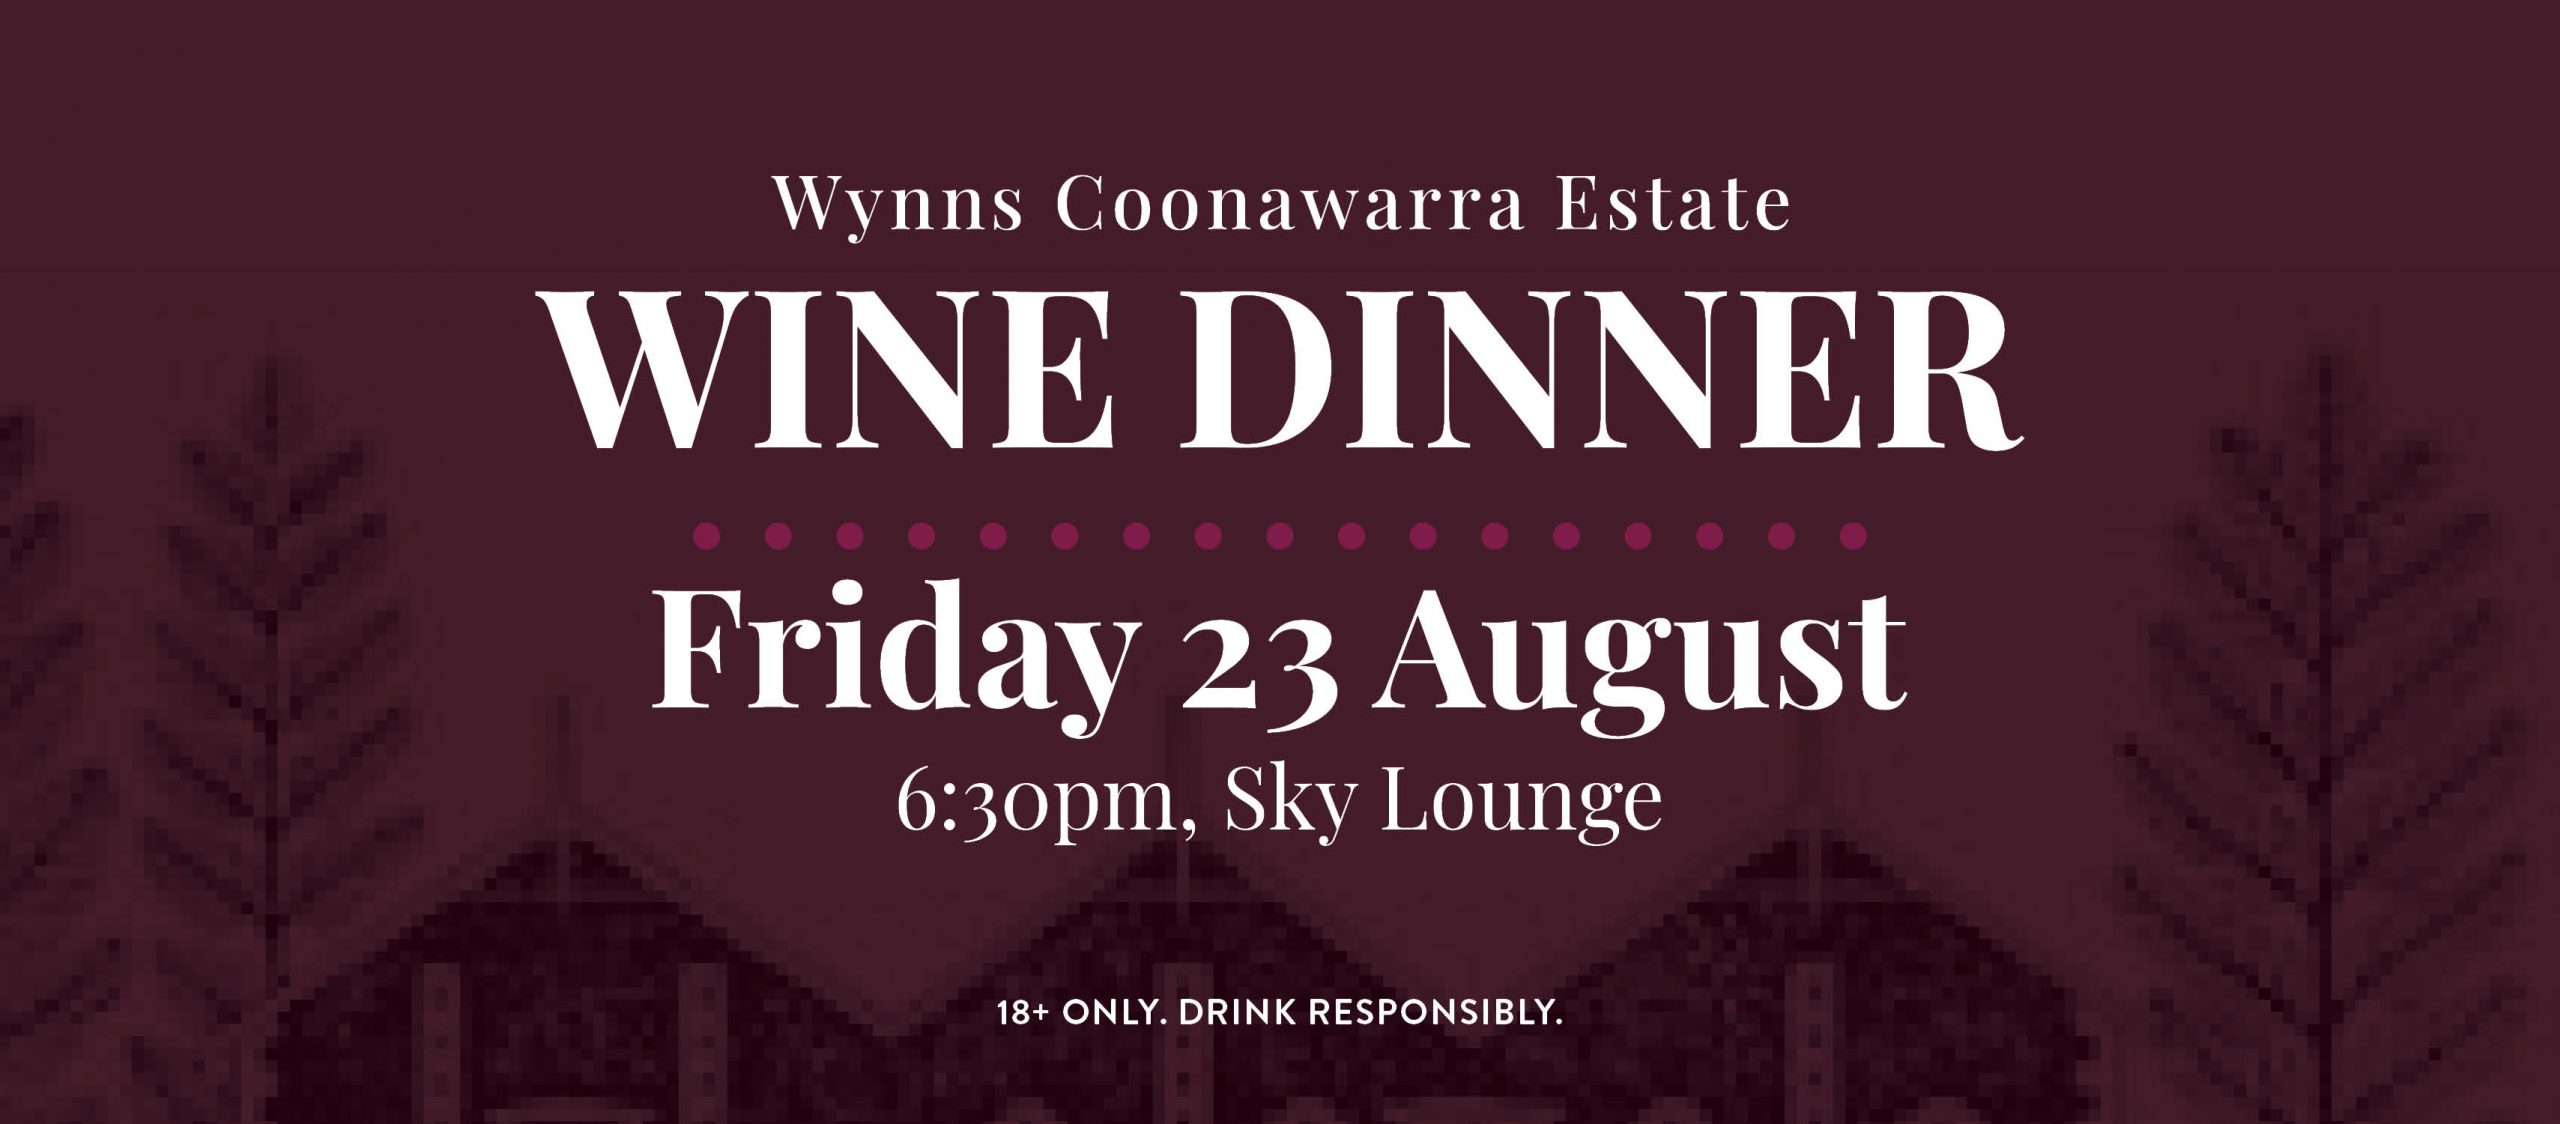 Wynns Coonawarra Wine Dinner